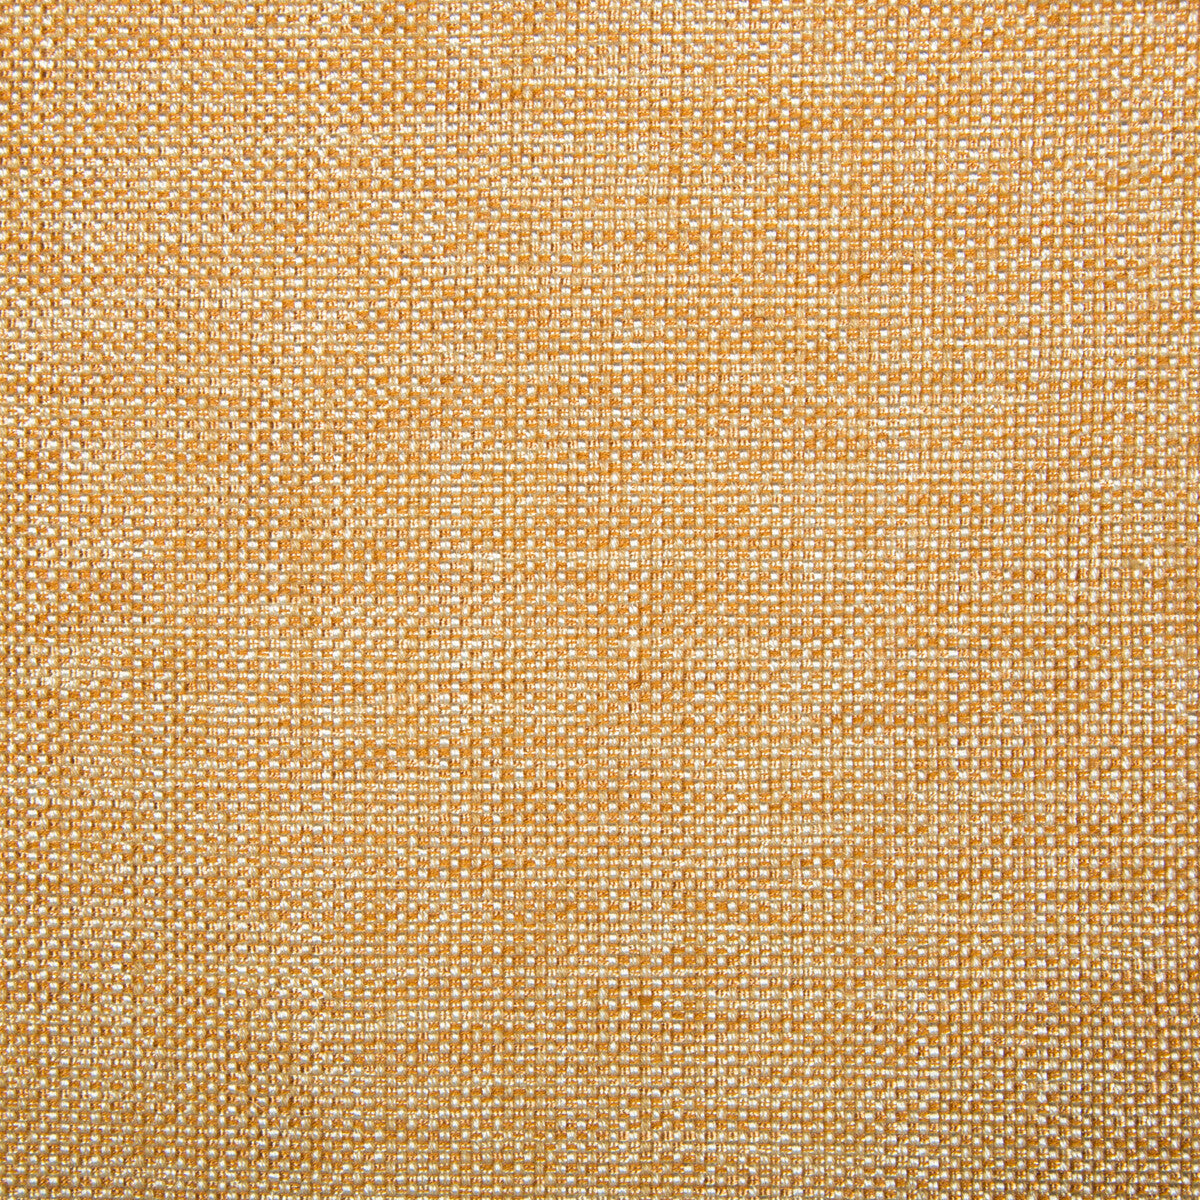 Kravet Smart fabric in 34939-1211 color - pattern 34939.1211.0 - by Kravet Smart